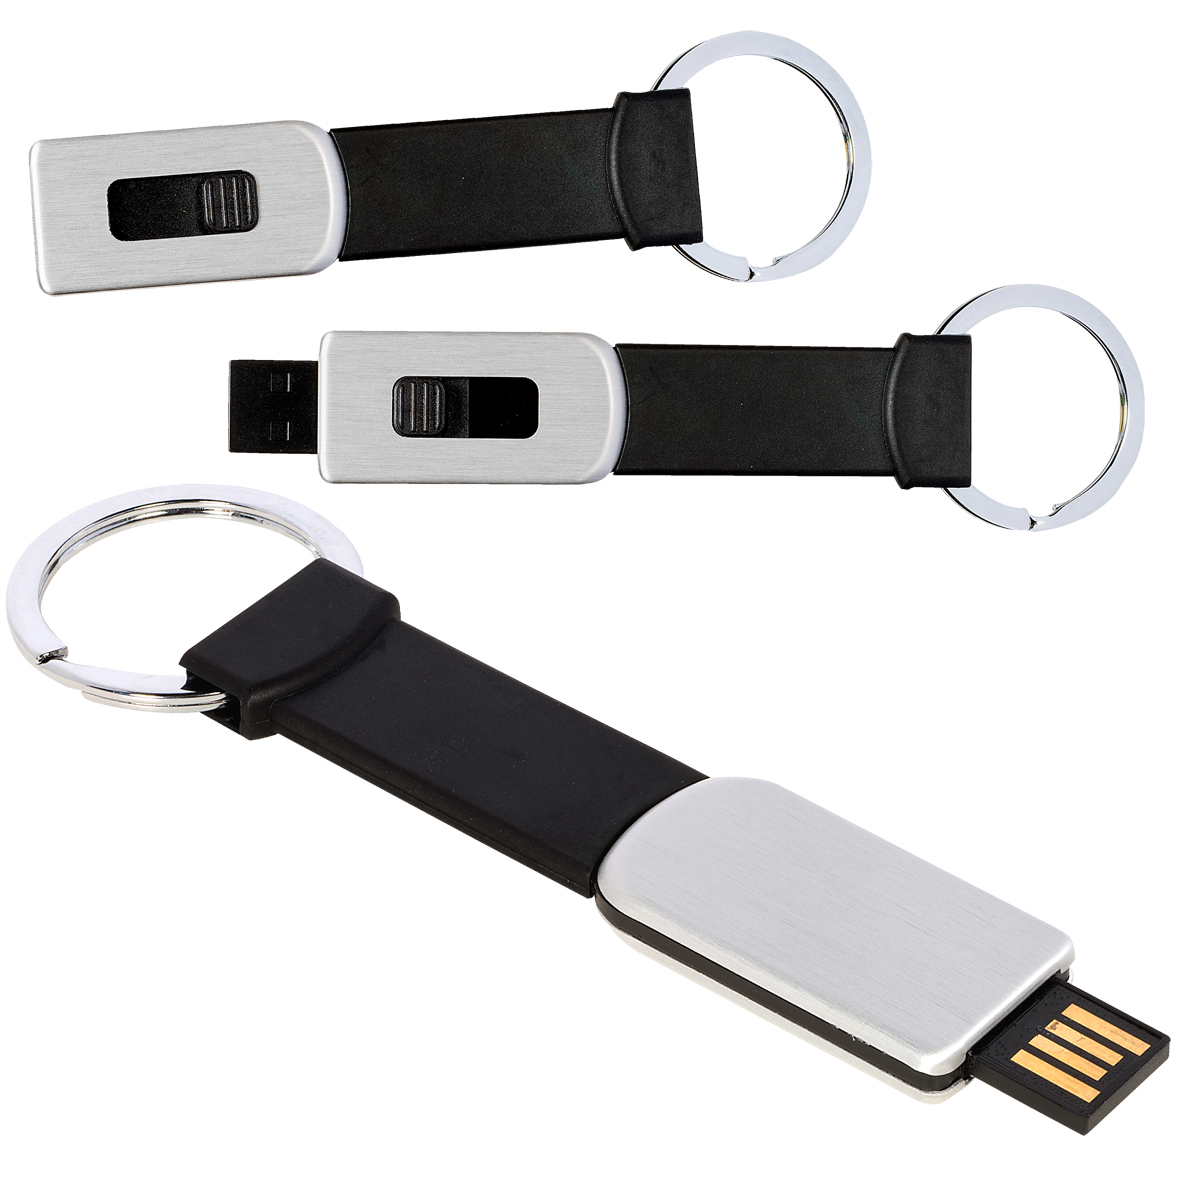 Key Chain USB Memory Flash Drive - 4GB